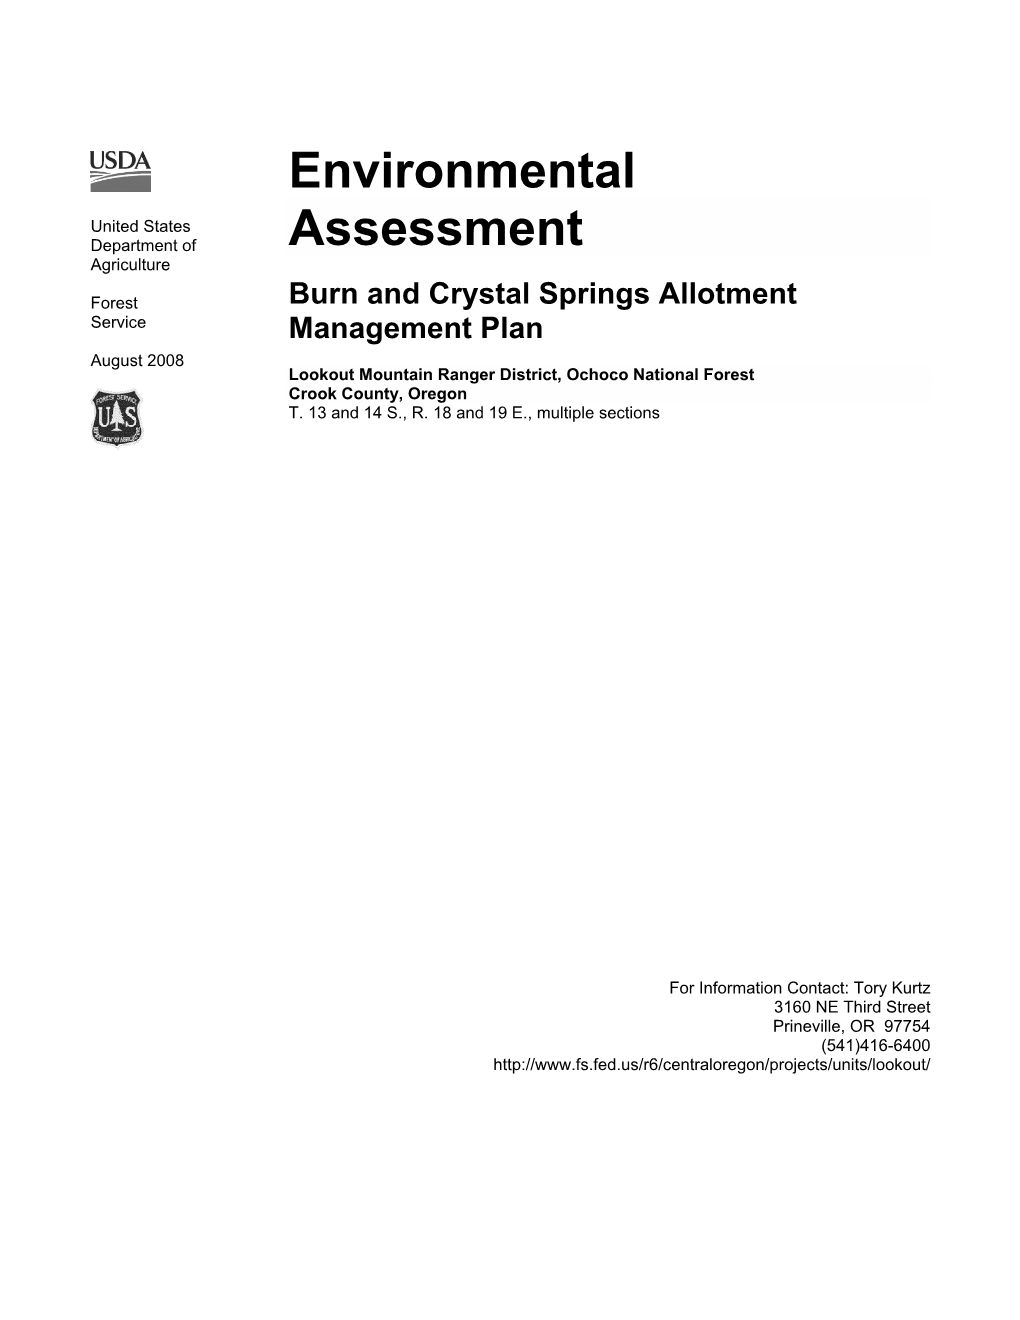 Environmental Assessment Burn and Crystal Springs Allotment Management Plan DRAFT